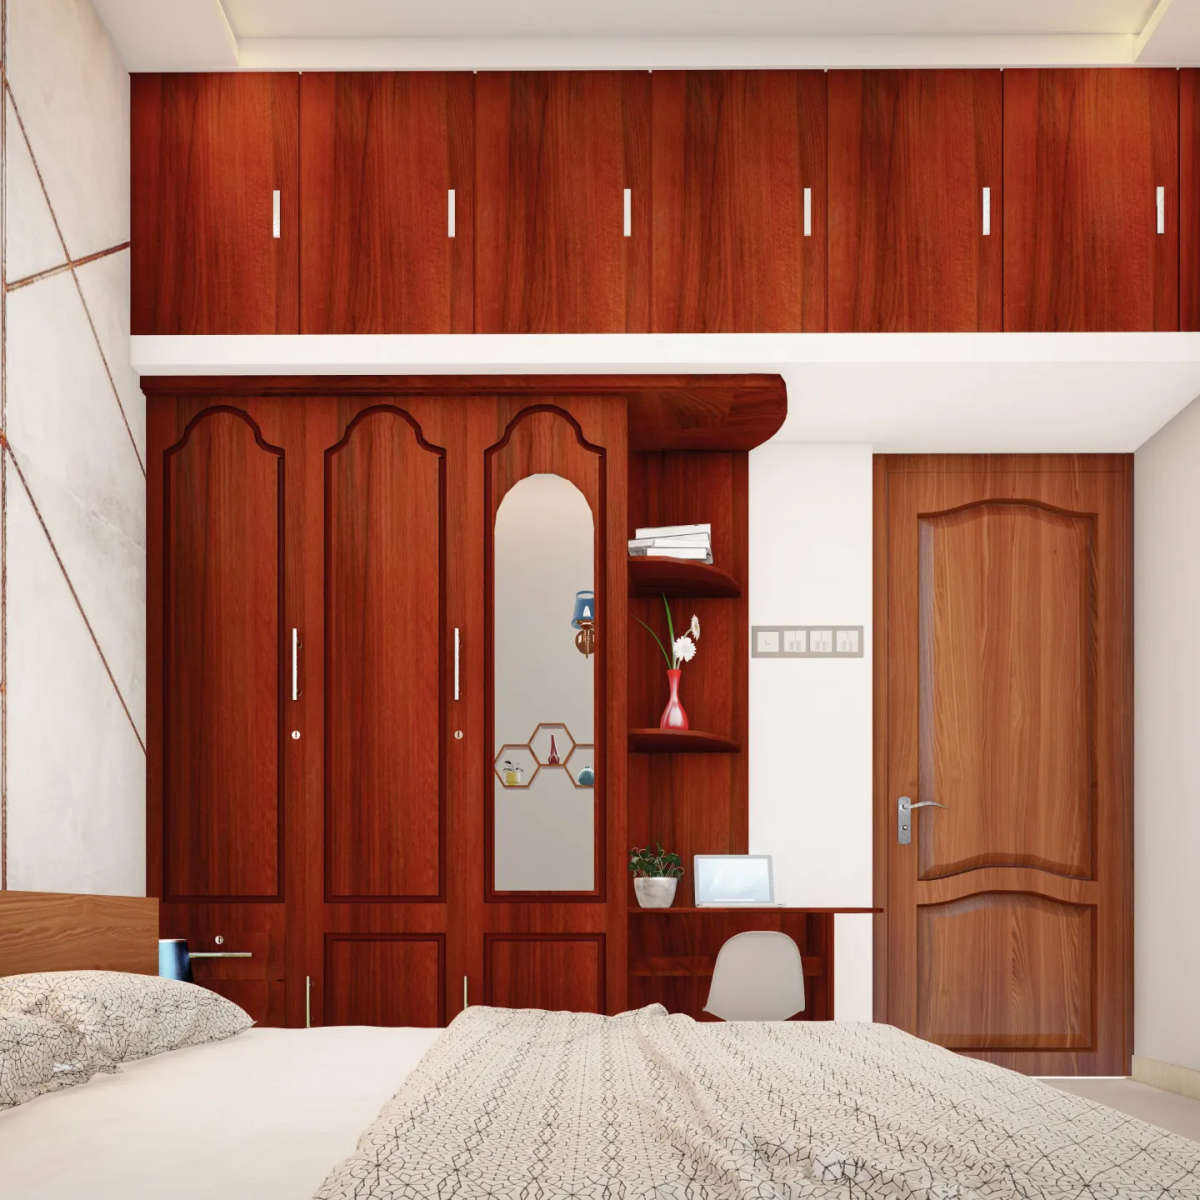 client: Abid Makkaraparamba

#interior #InteriorDesigner #Architectural&Interior #interiorkerala #BedroomDecor #interiordecoration #reach